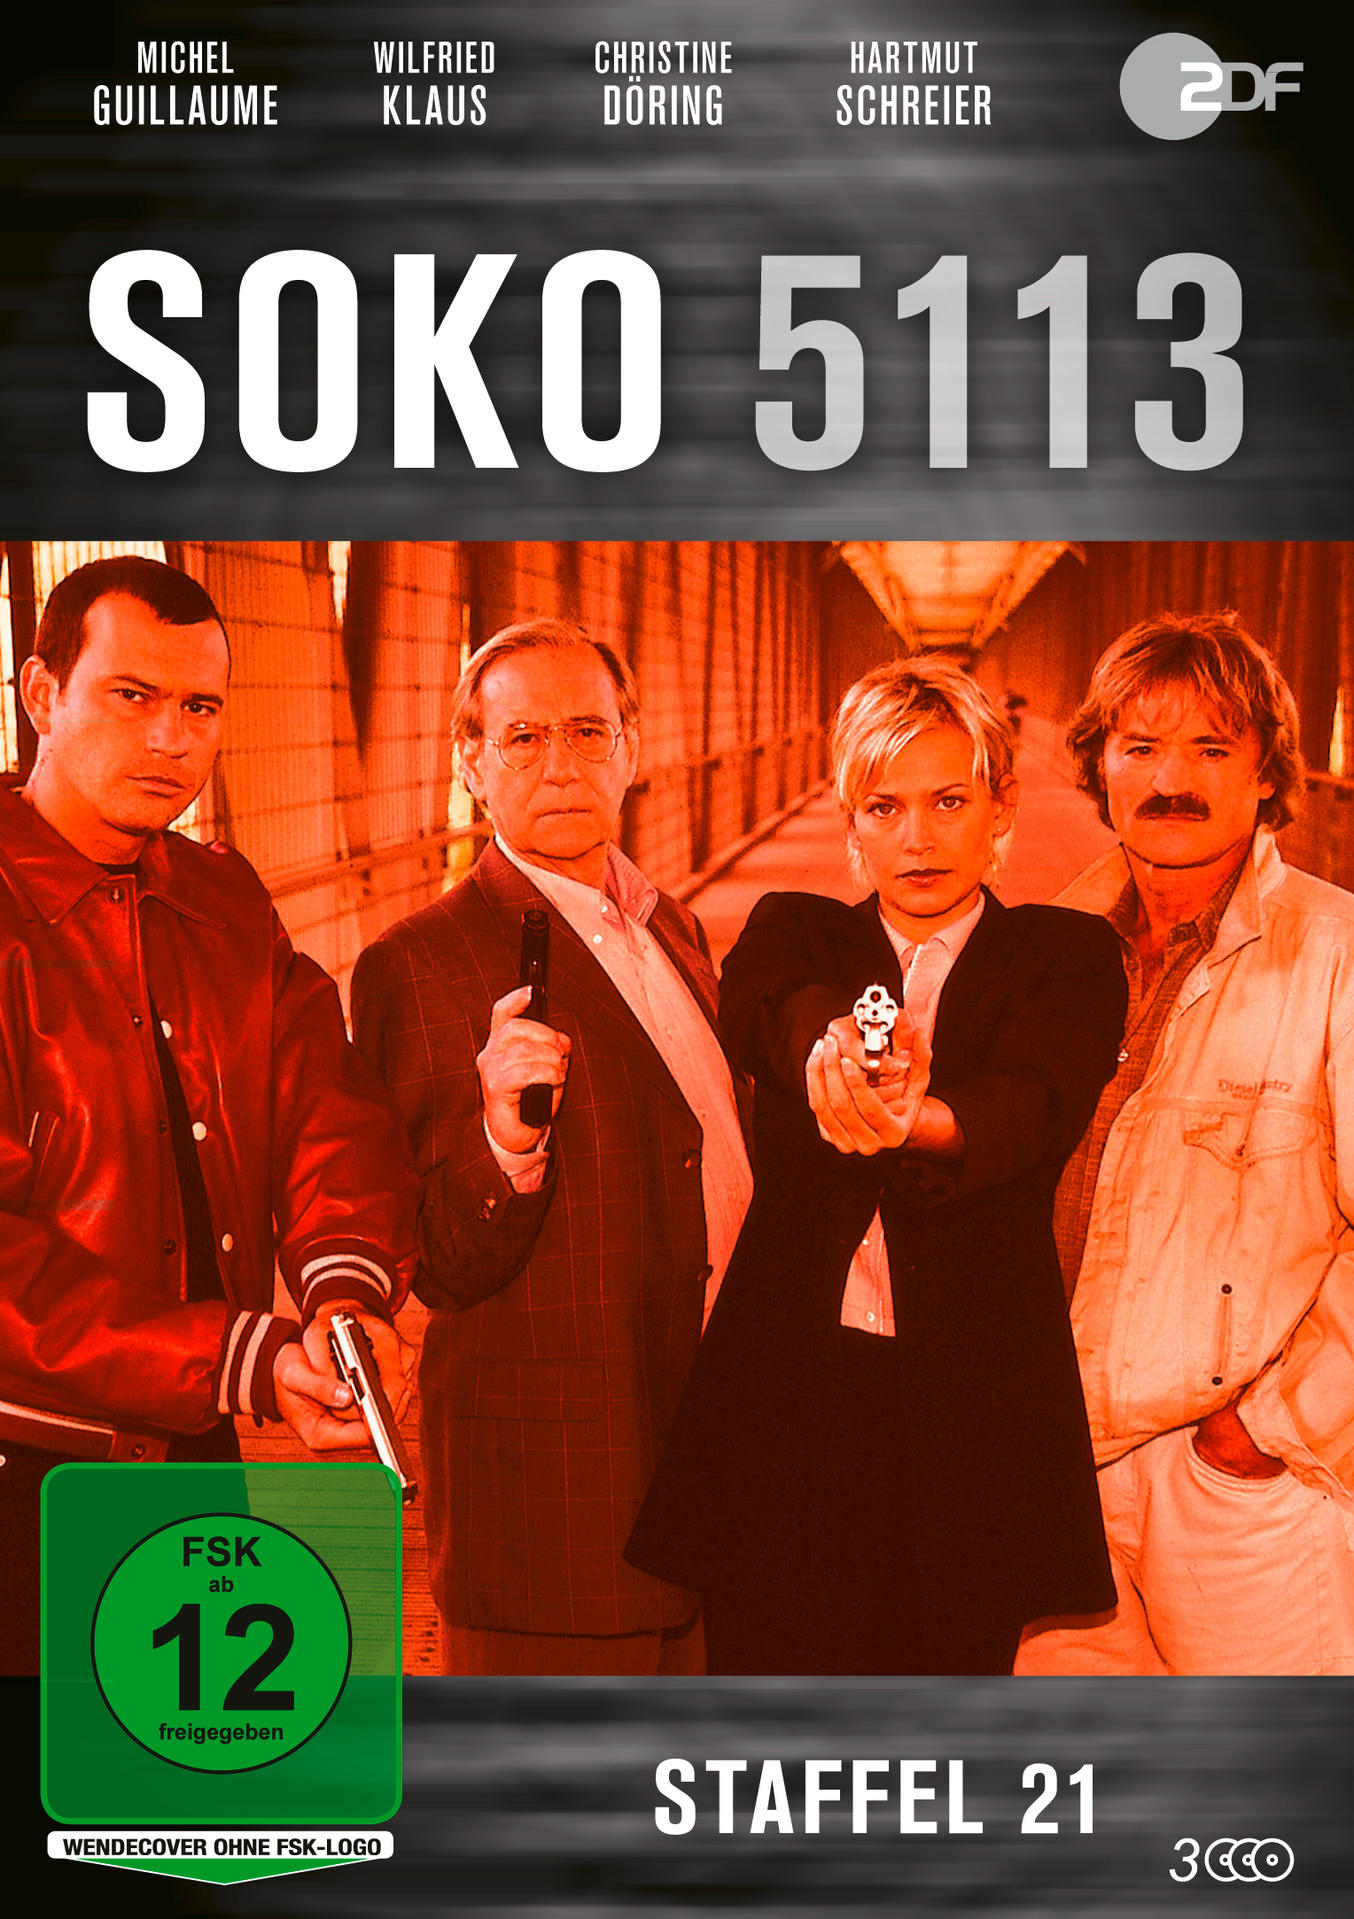 Staffel Soko - DVD 5113 21